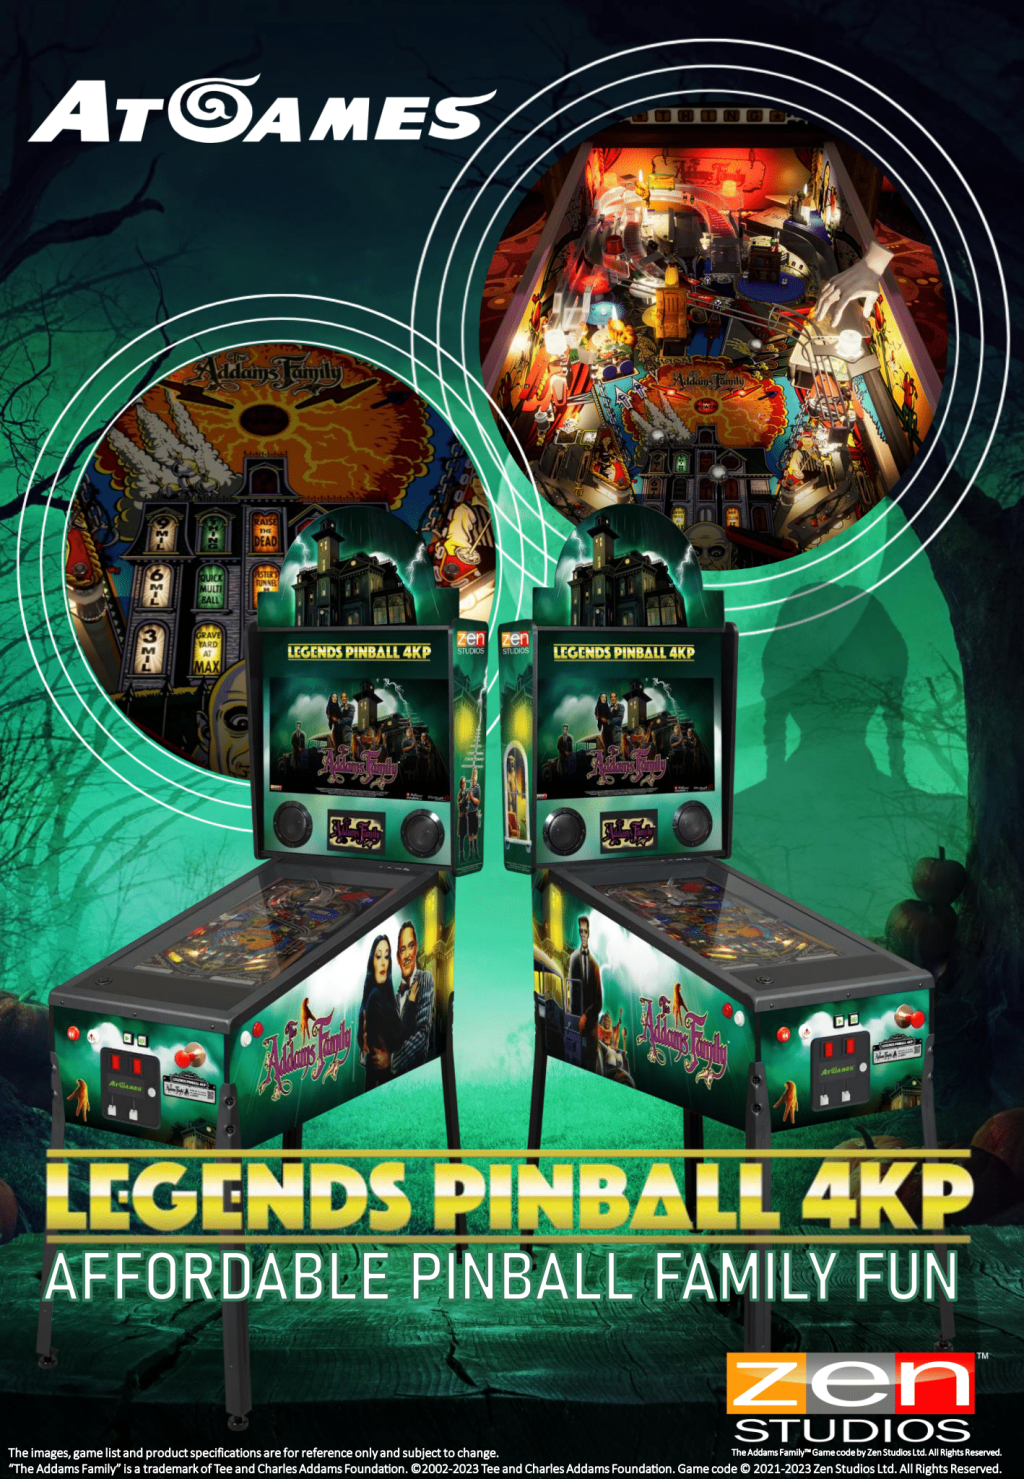 Preorder - FX Legends 4K Star Trek™ Collector's Edition Pinball (CEP)